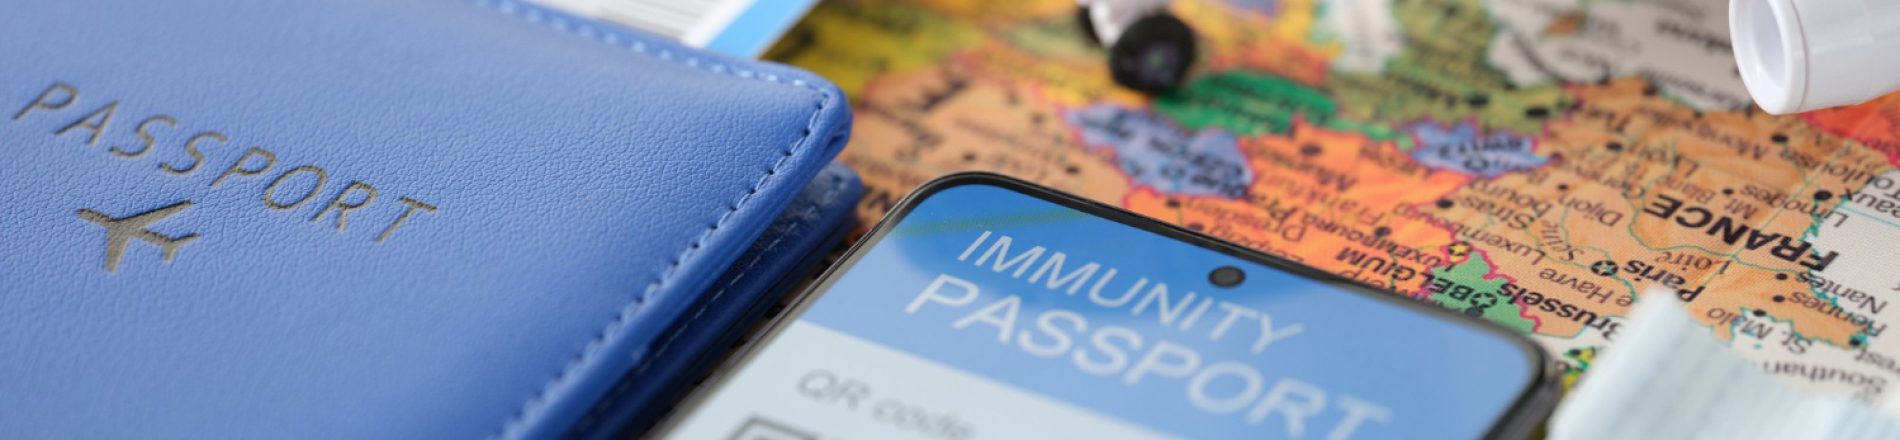 smartphone-screen-certificate-immunity-against-covid-plane-ticket-passport-table